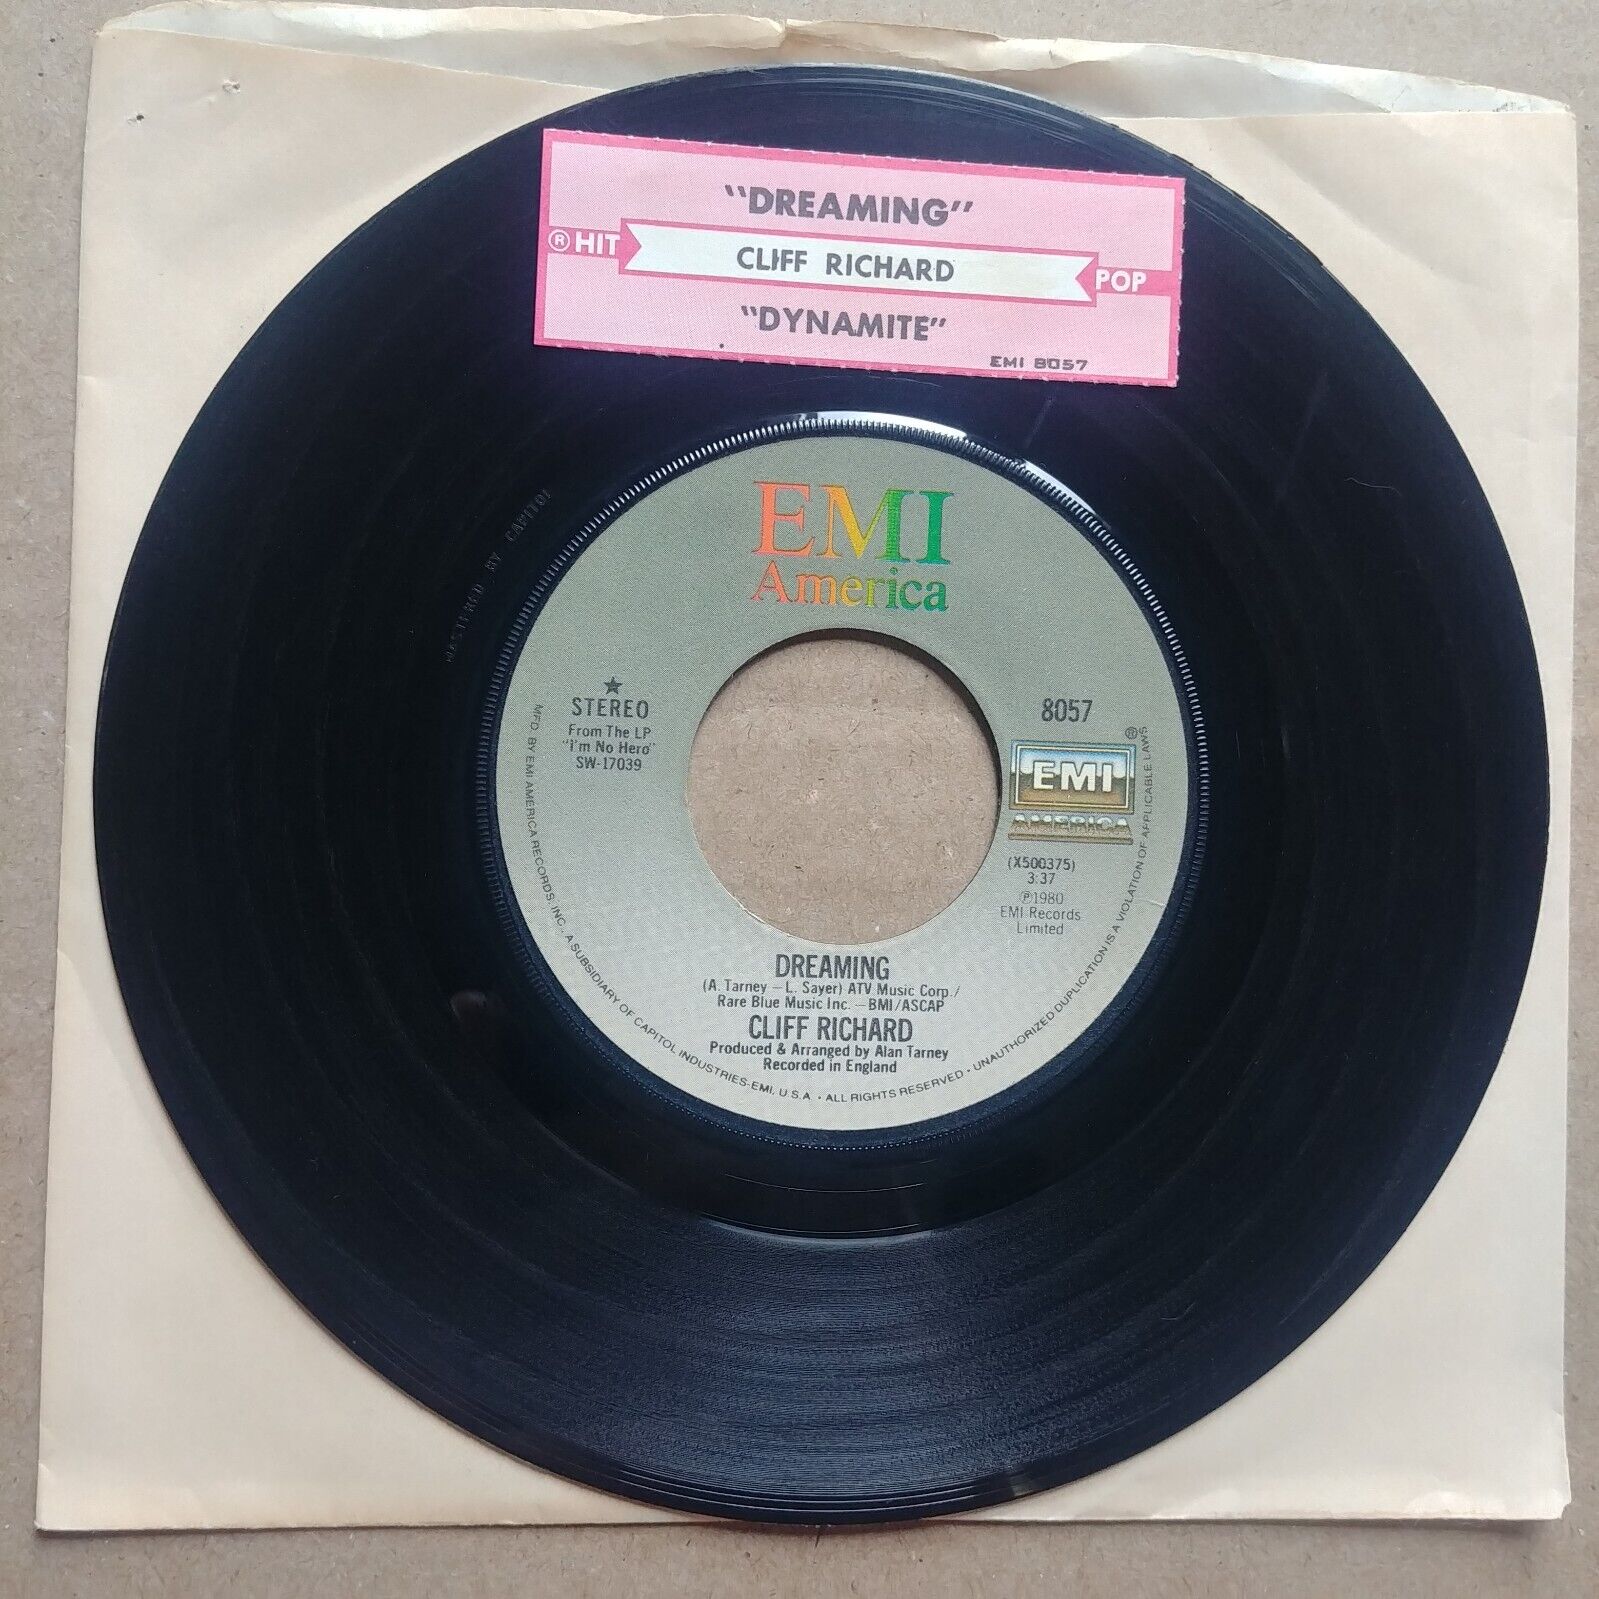 CLIFF RICHARD Dynamite/Dreaming 45 7" POP ROCK Record Vinyl Records 1980